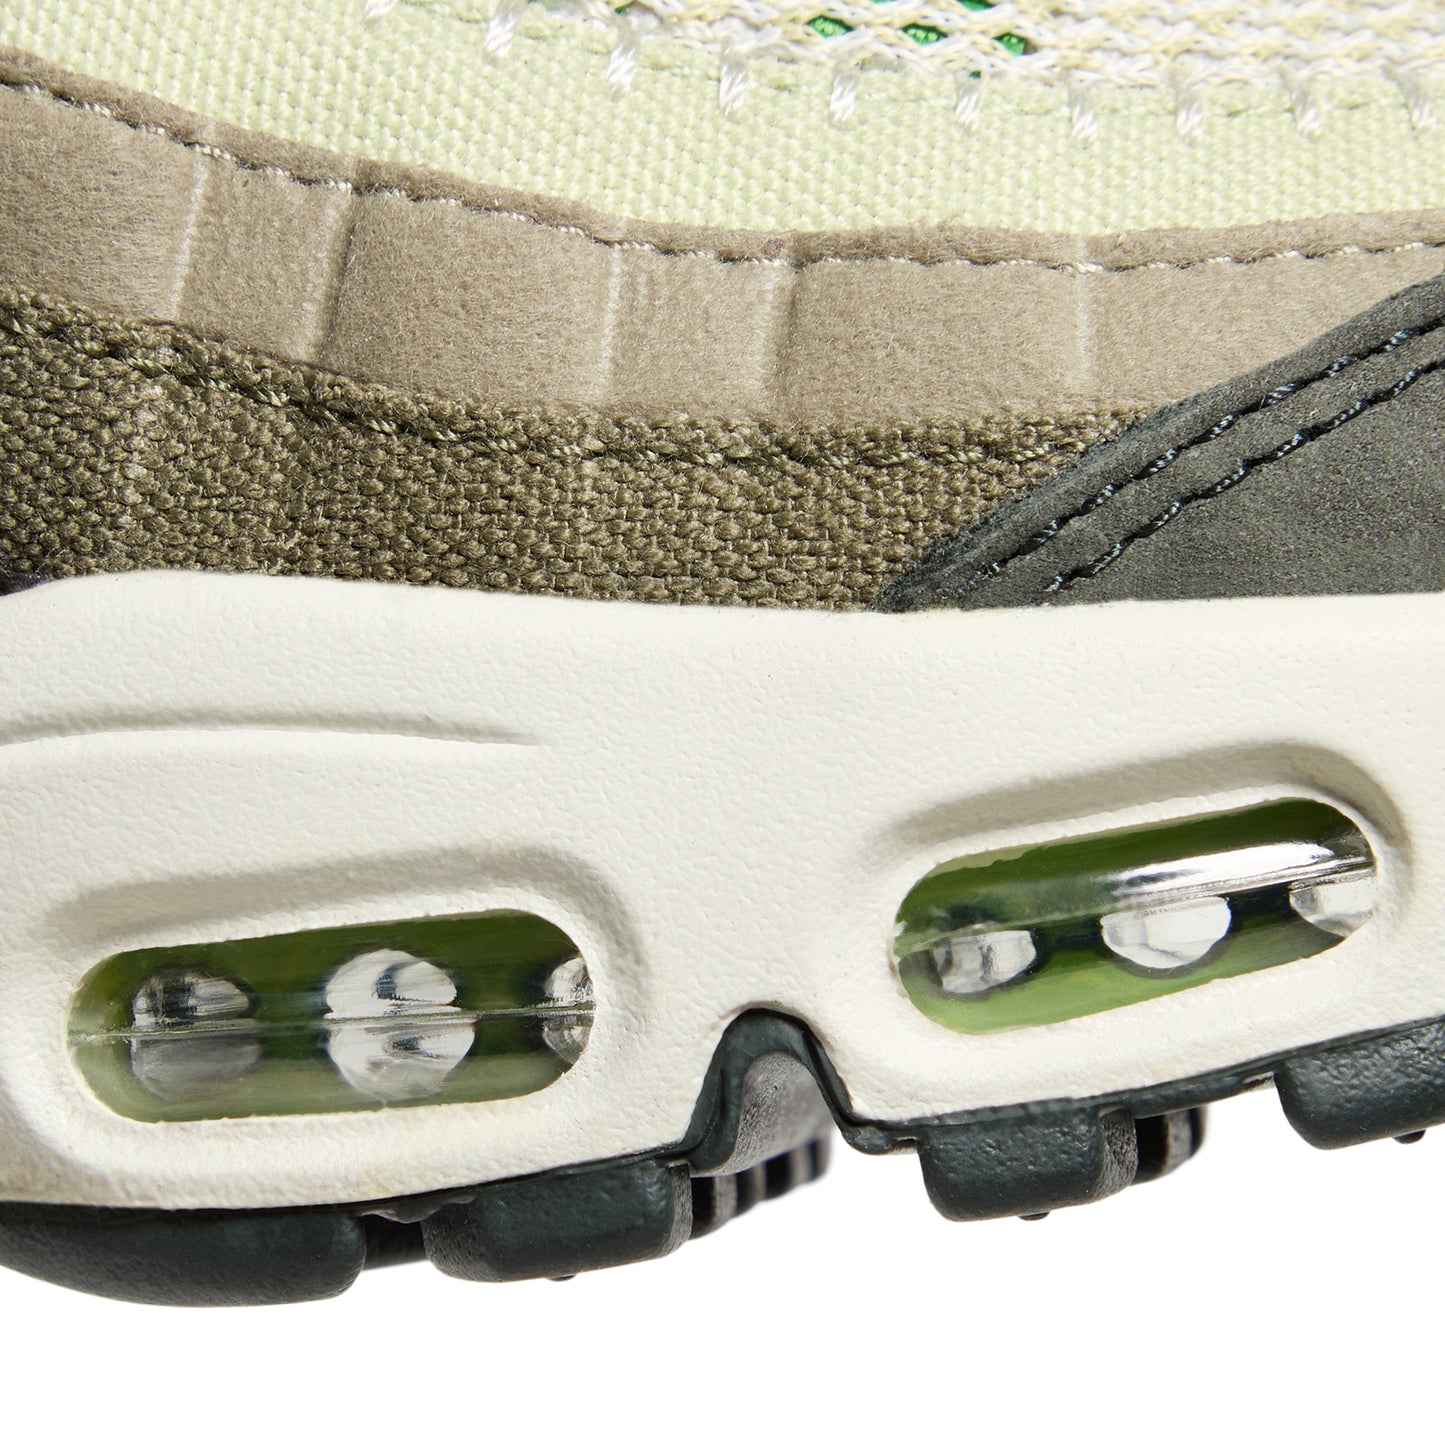 Nike Womens Air Max 95 (Night Forest/Chlorophyll/Medium Olive)